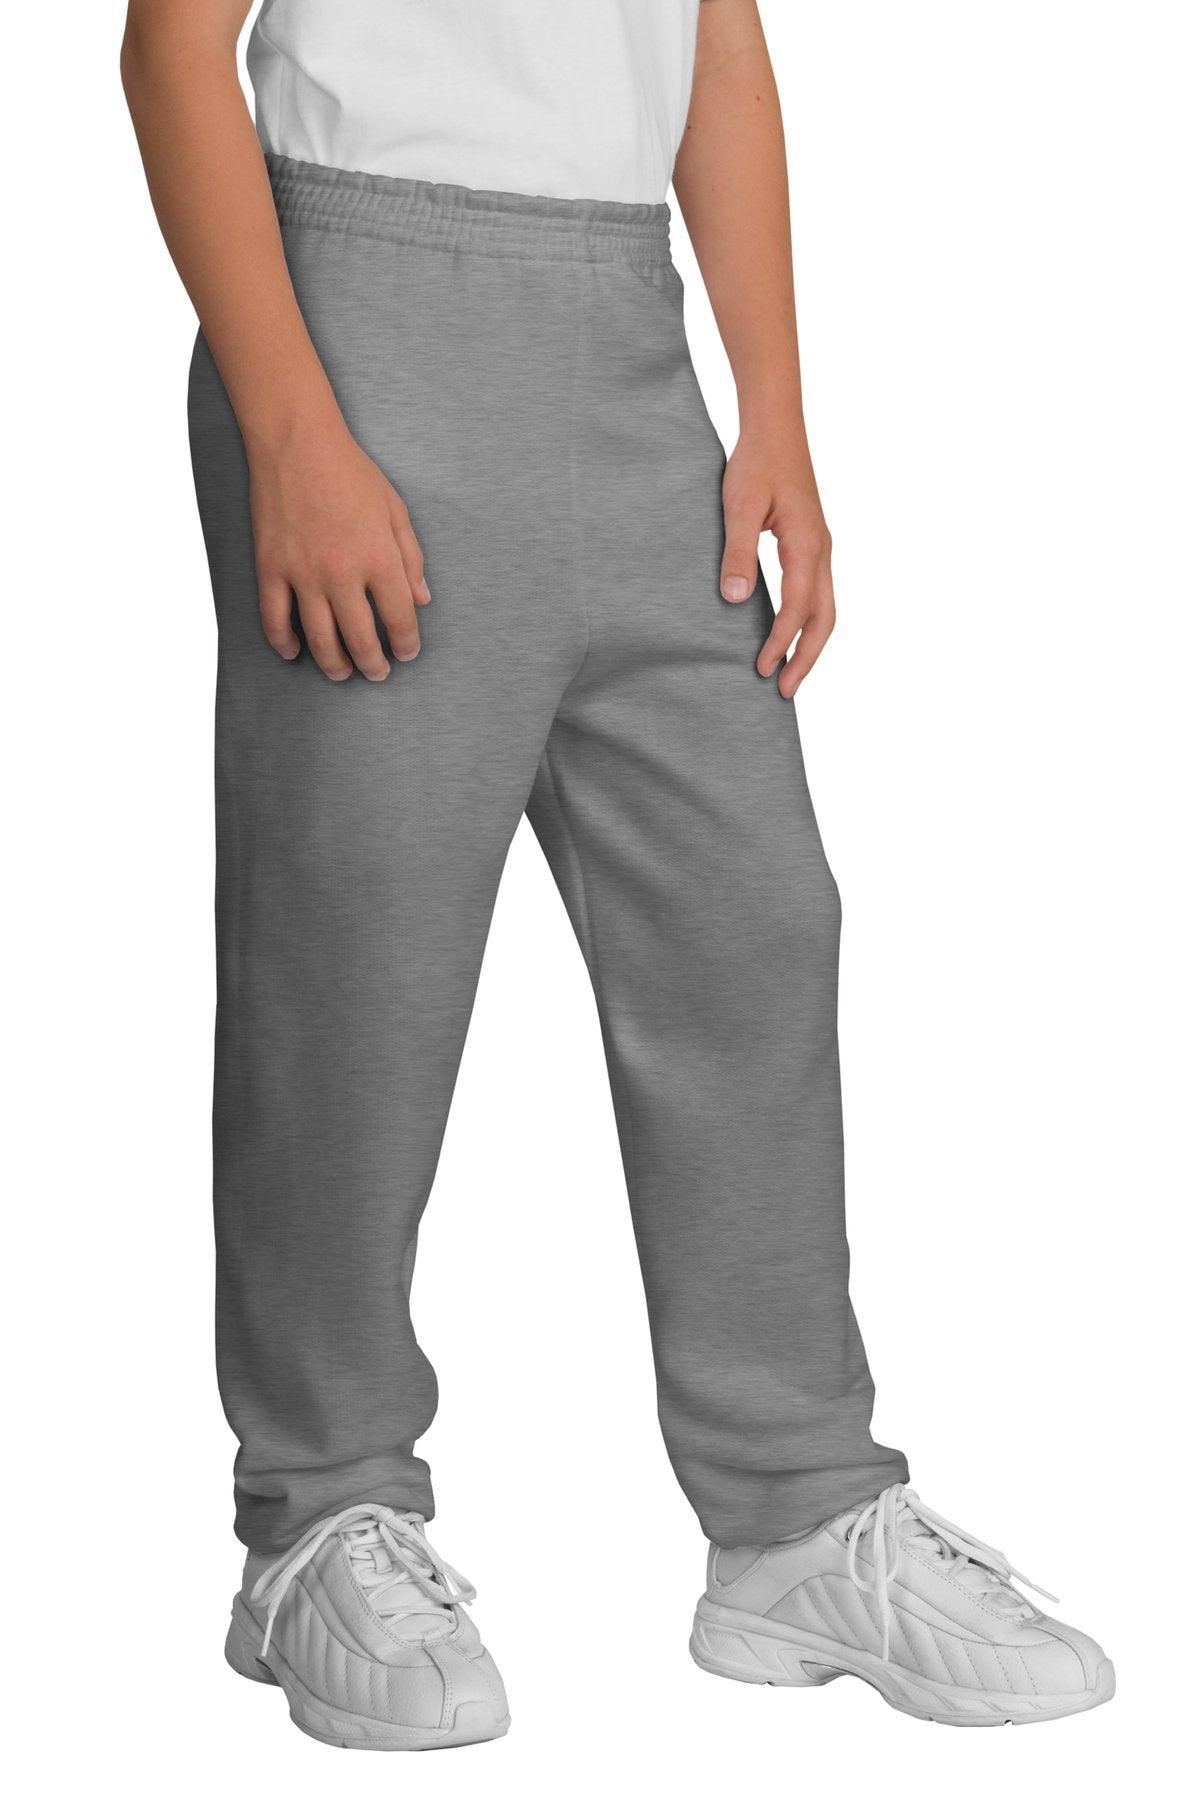 Port & Company - Youth Core Fleece Sweatpant. PC90YP - Dresses Max